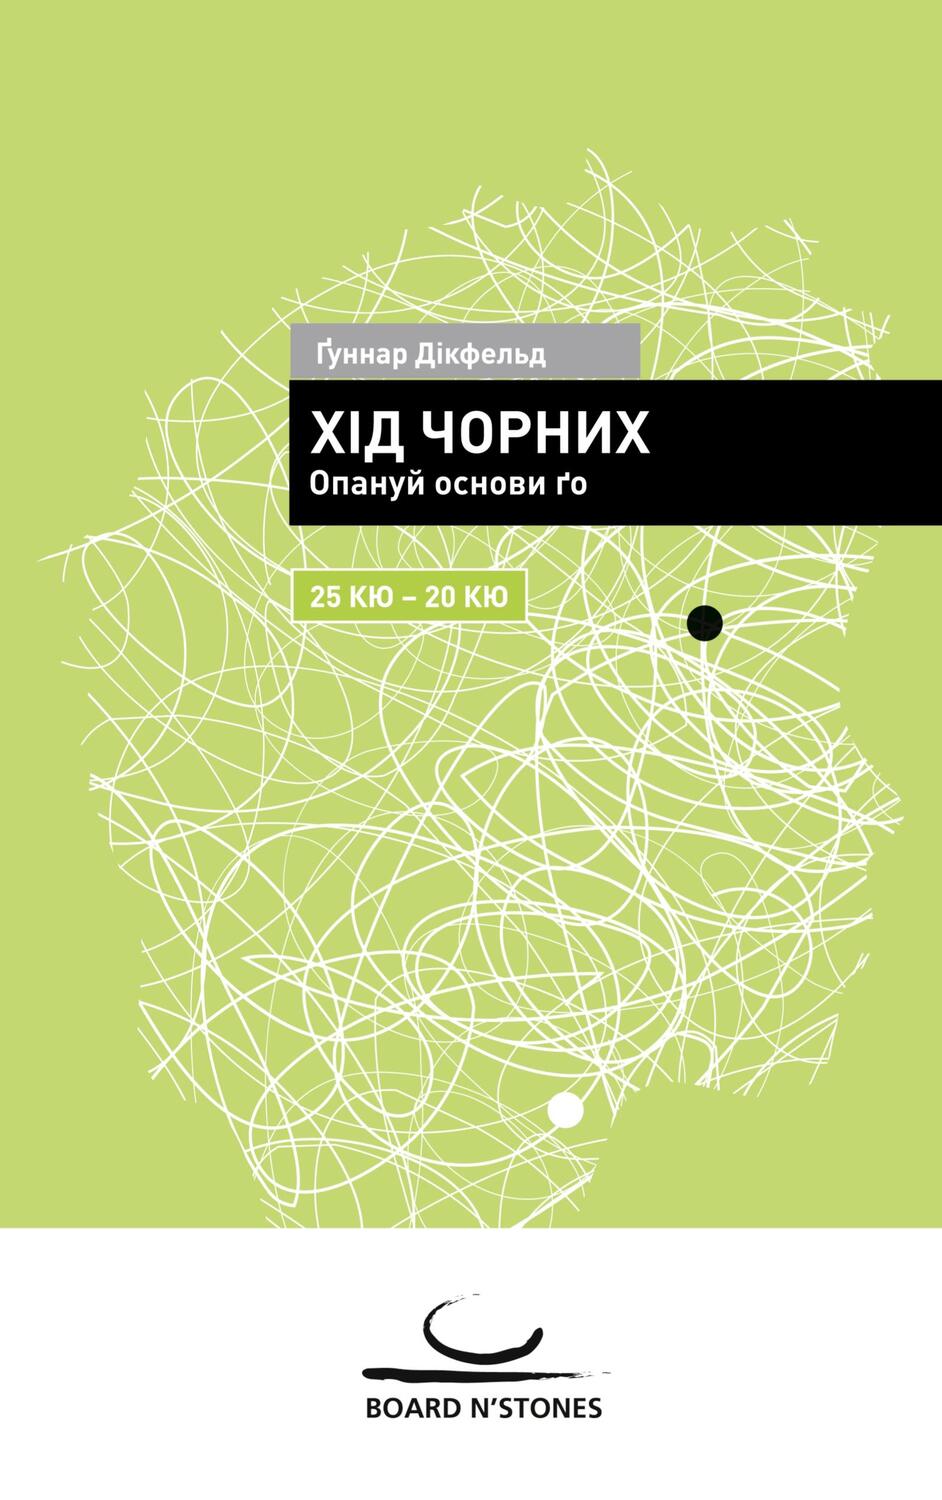 Cover: 9783987940125 | Khid chornykh | Opanuj osnovy go. 25 kyu - 20 kyu | Gunnar Dickfeld